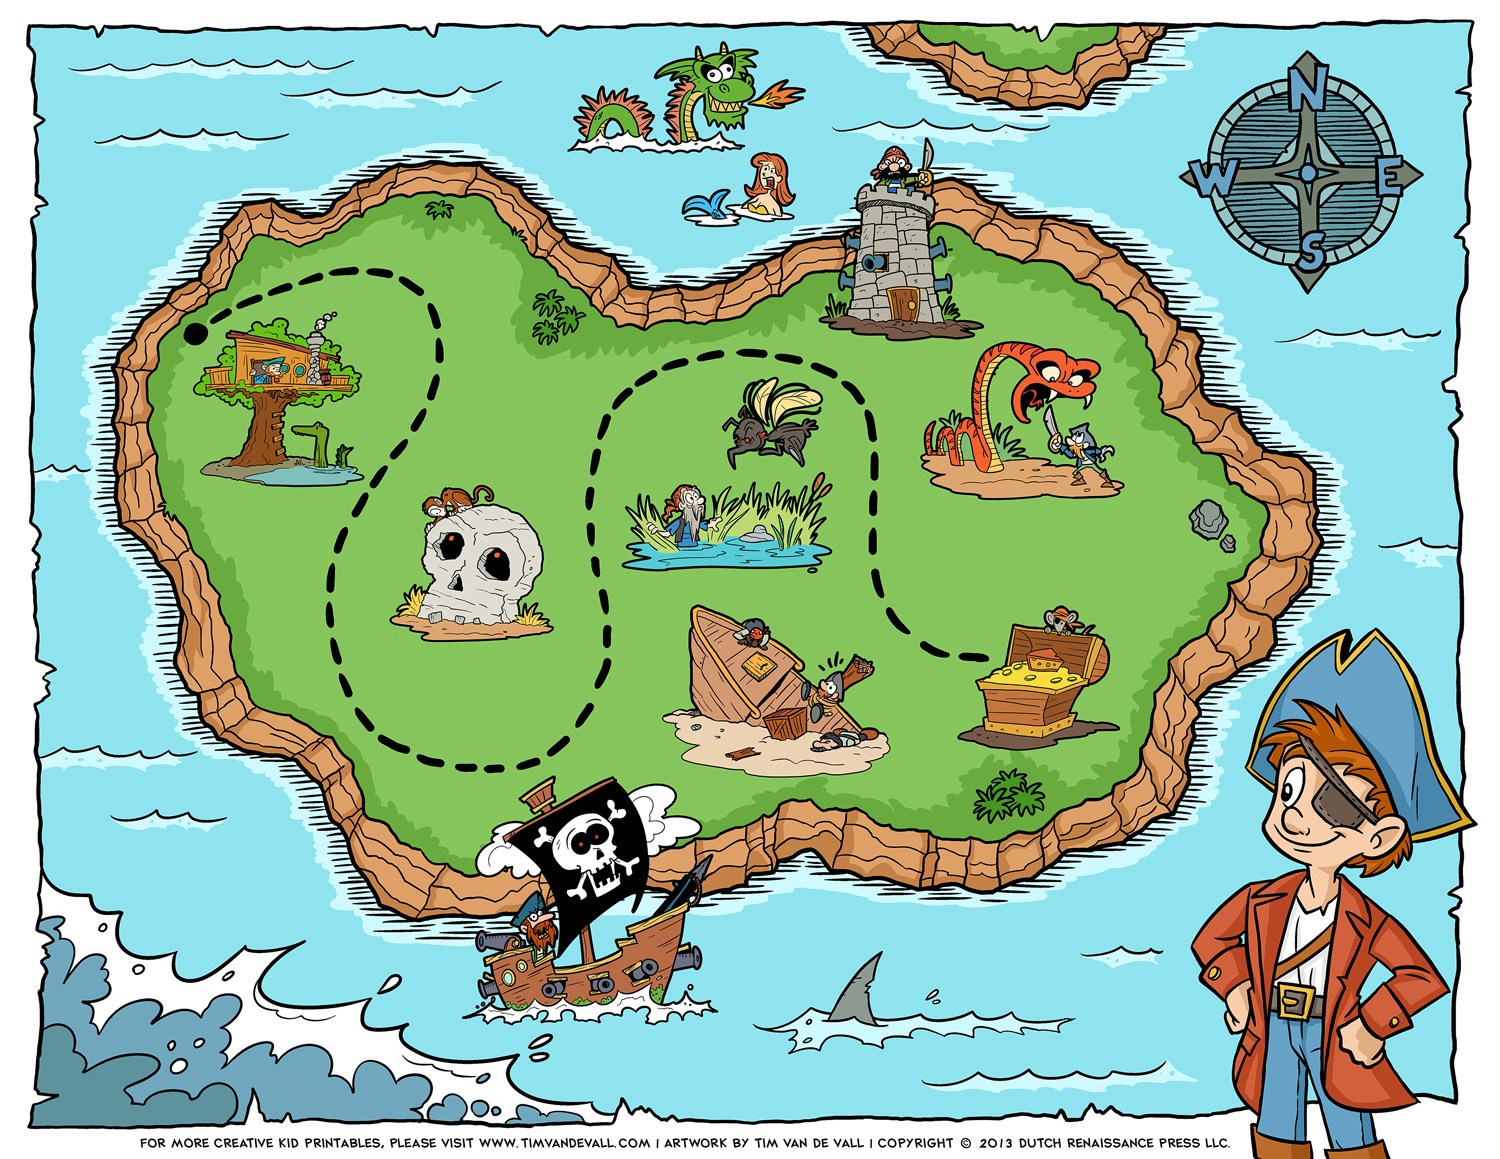 Как найти сокровище по карте. Карта пирата остров сокровищ. Карта пирата остров сокровищ для детей. Пиратская карта сокровищ для детей с островами. Карта сокровищ пиратов.